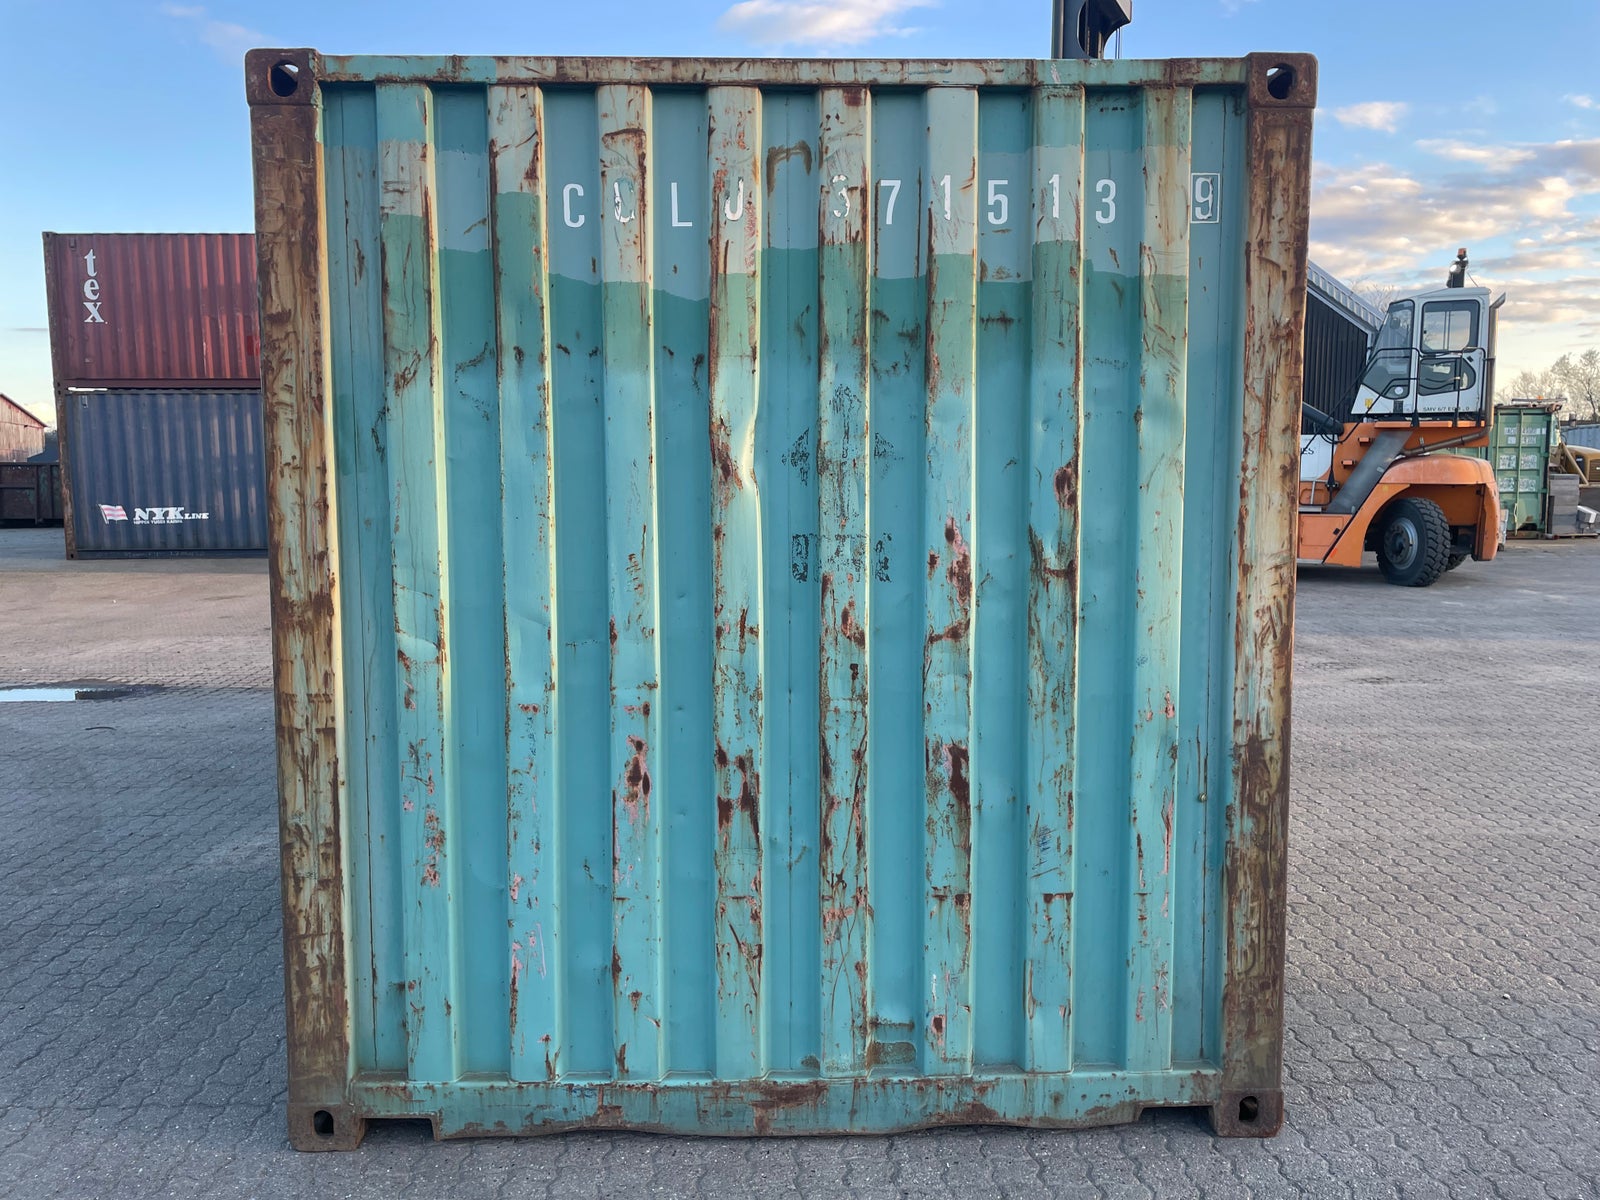 20 fods Container- ID: CCLU 371513-9